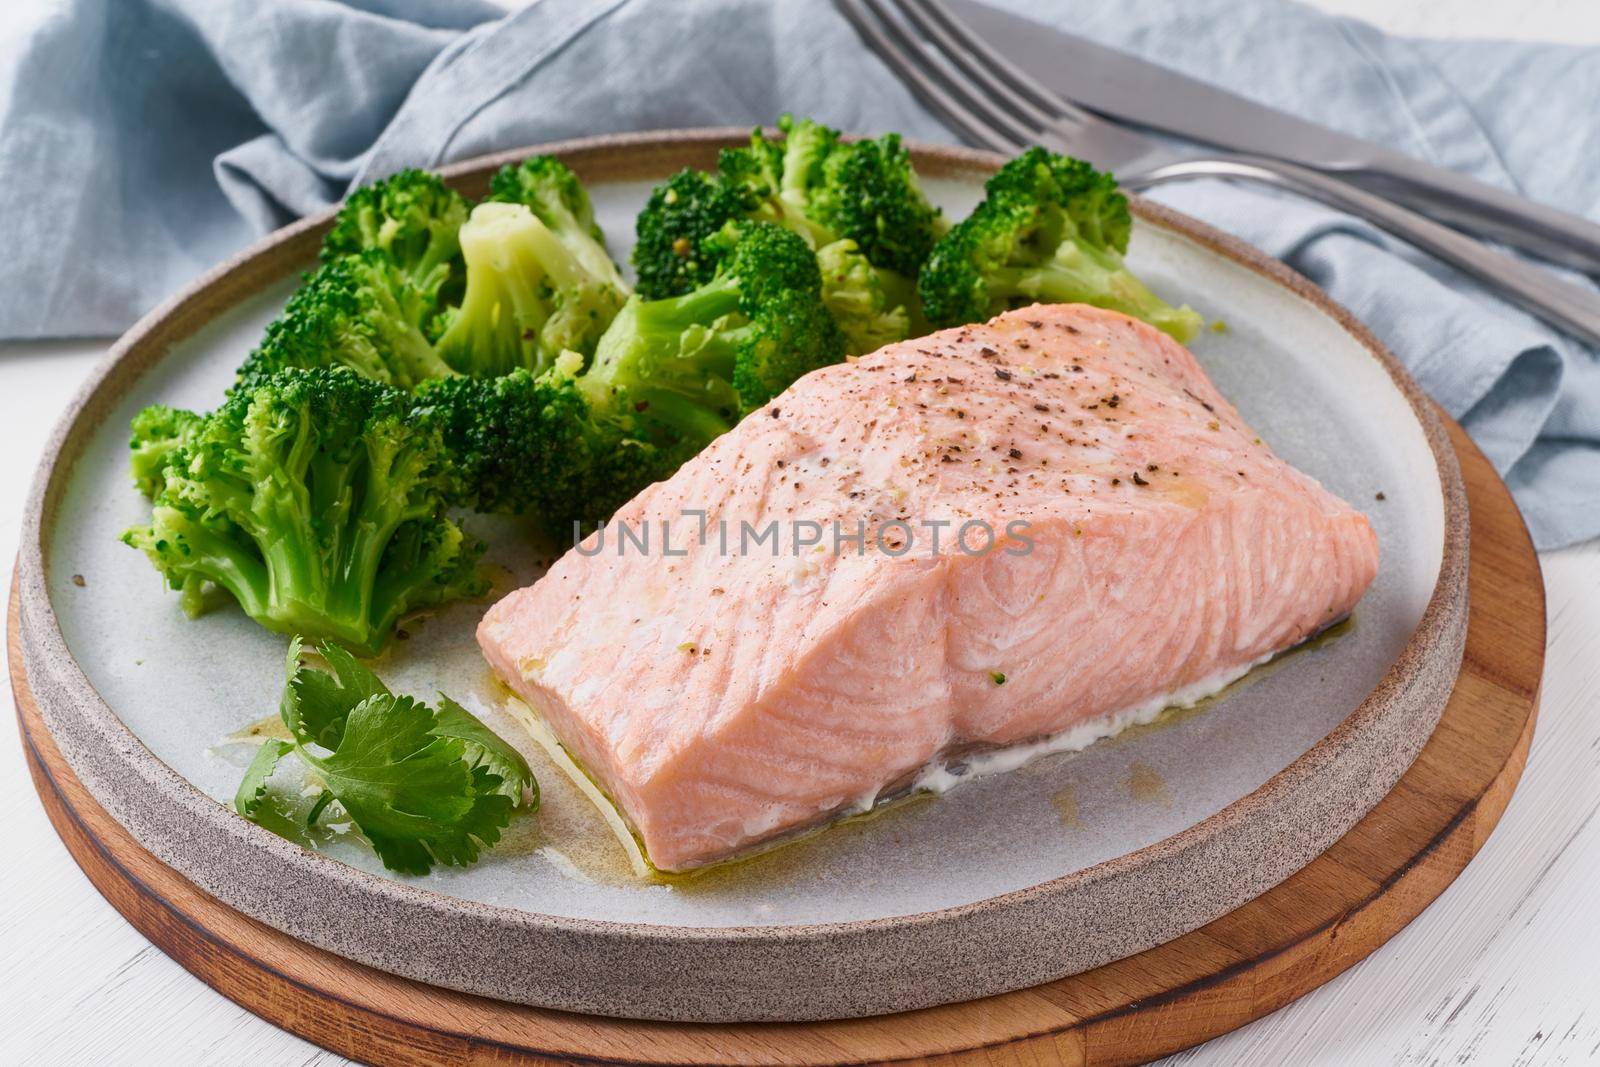 Steam salmon and vegetables, broccoli, paleo, keto, lshf or dash diet. Mediterranean food by NataBene